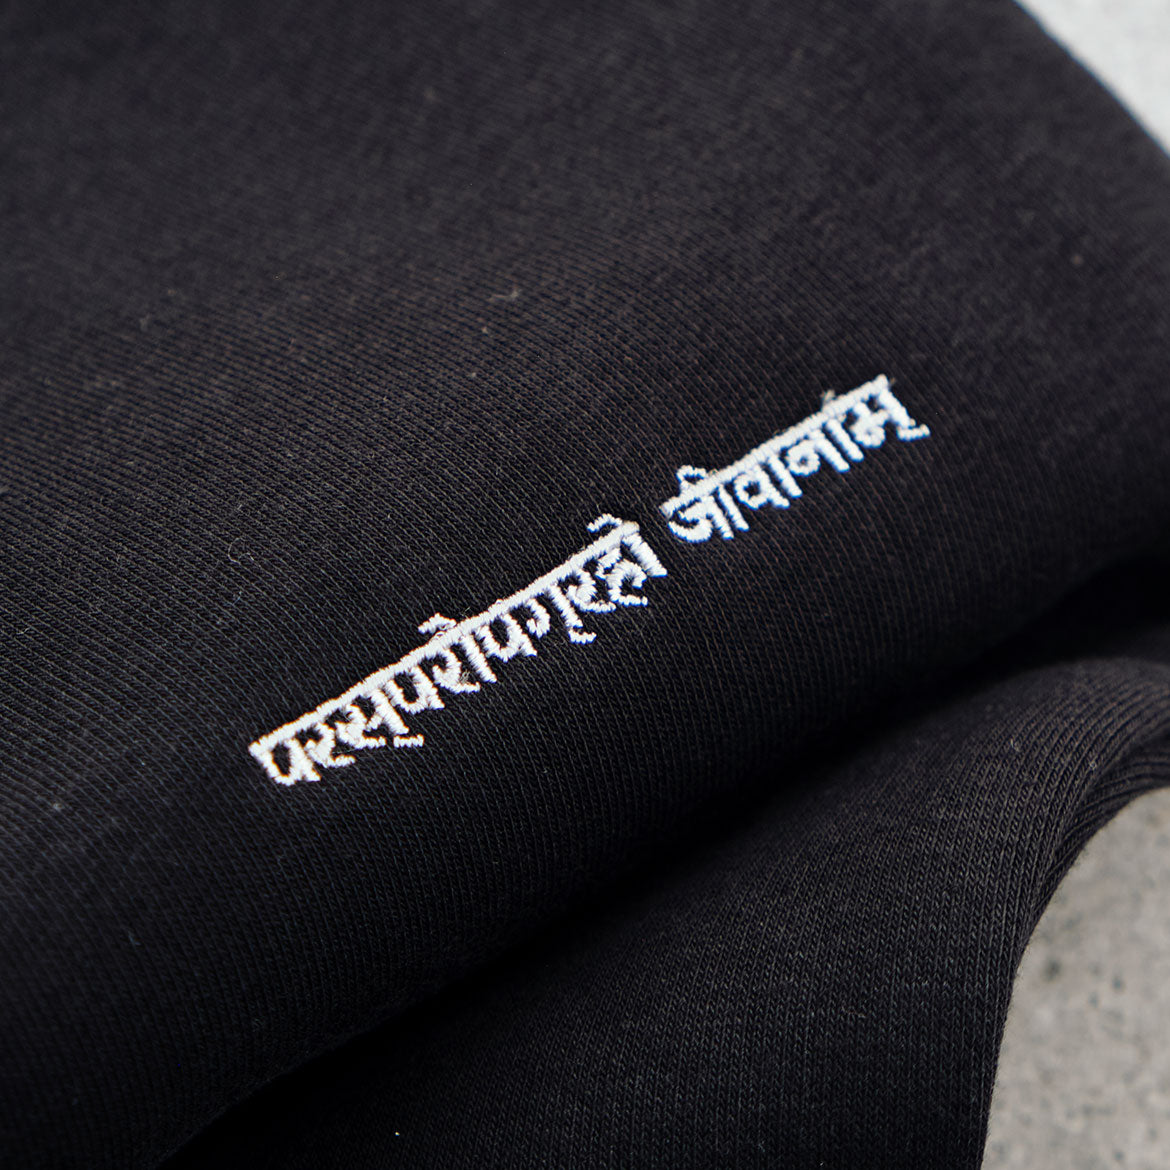 Sanskrit Signature Jogging Bottom